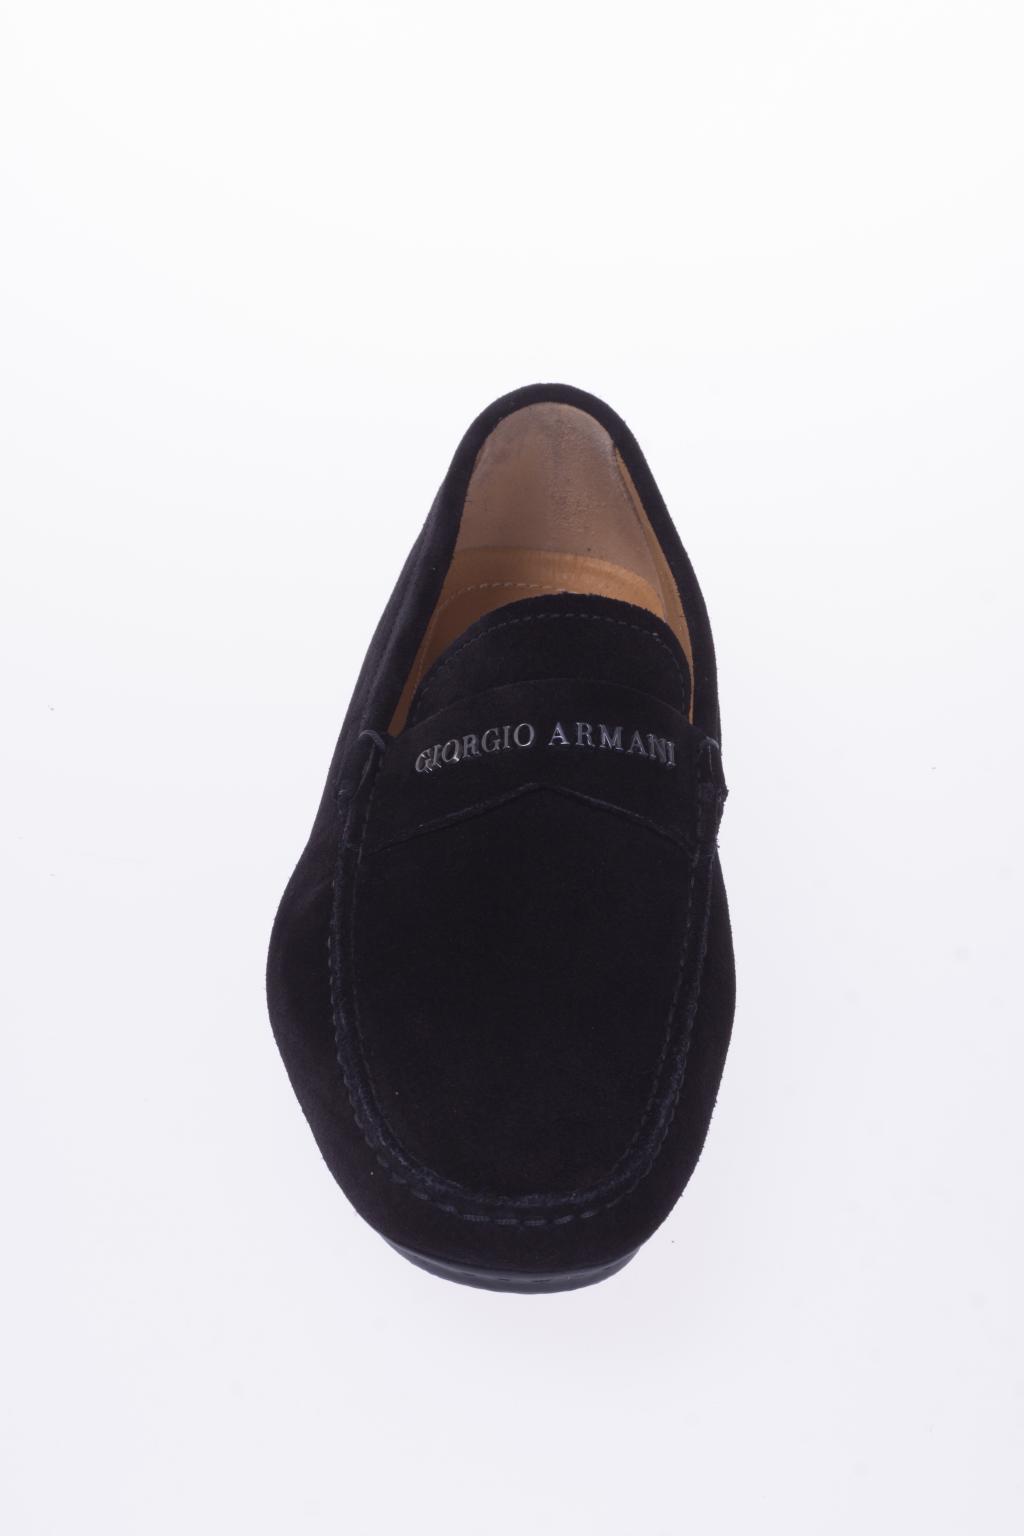 armani moccasin slippers